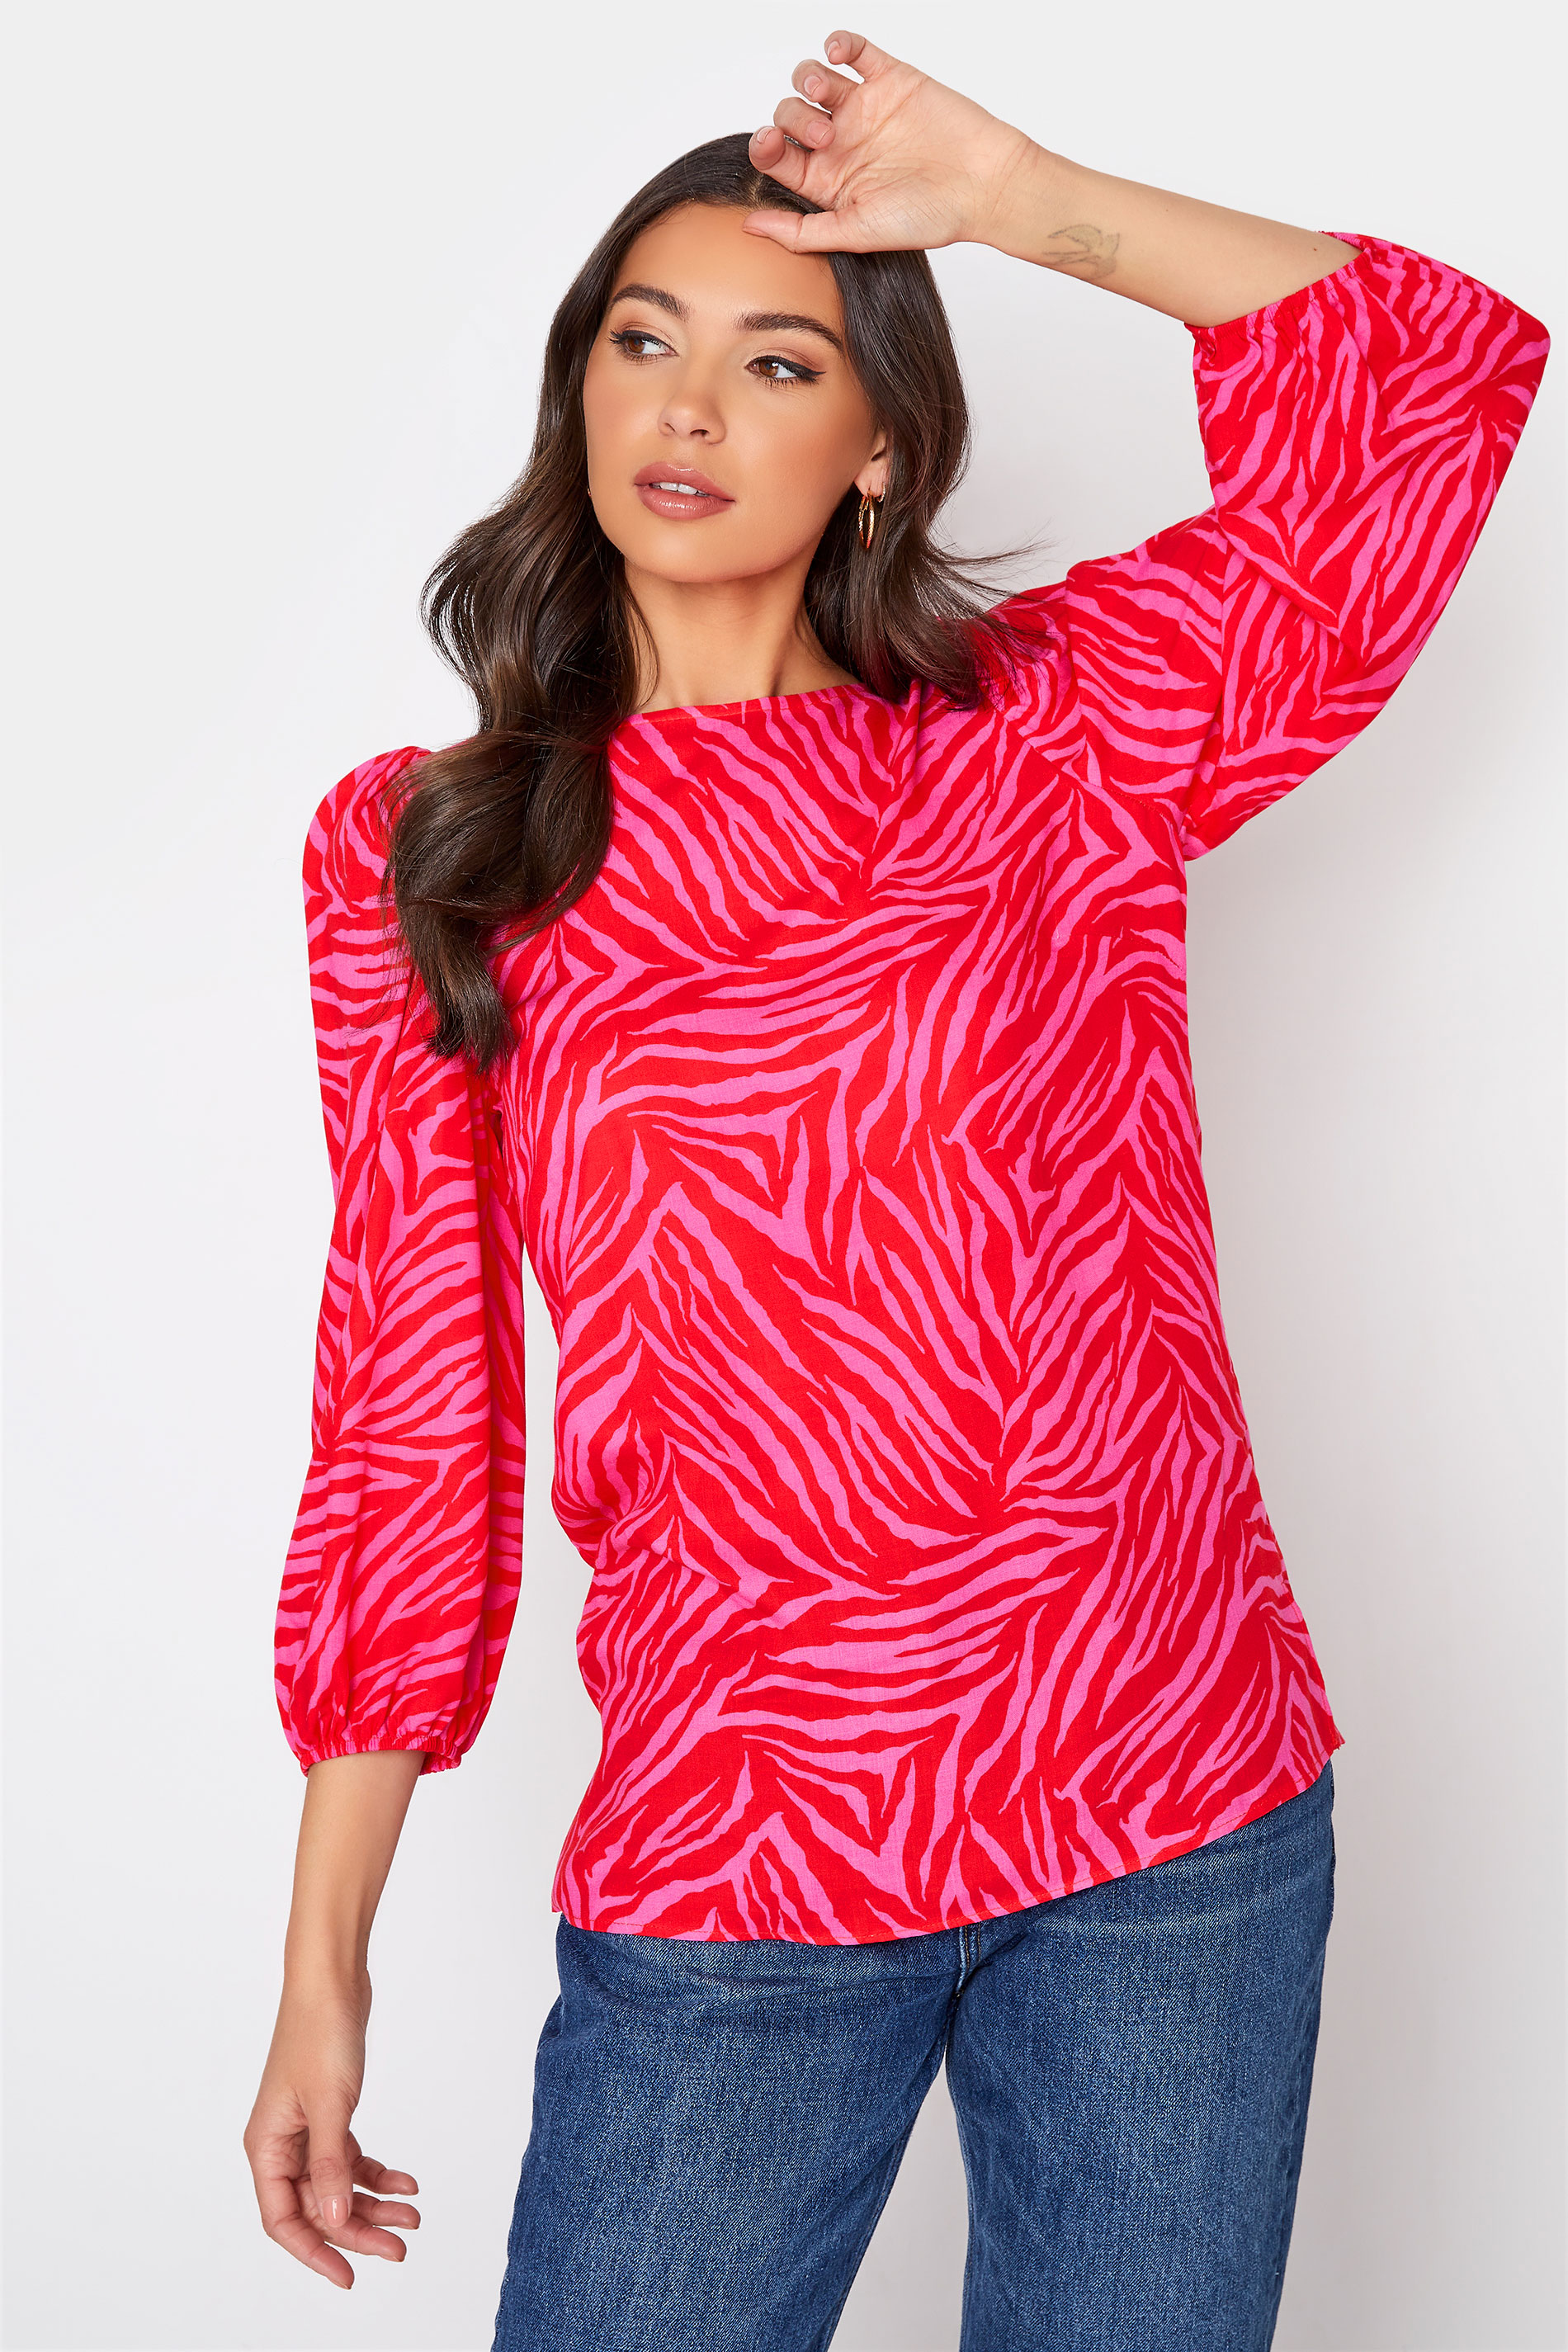 Tall Women's LTS Bright Pink Zebra Print Puff Sleeve Top | Long Tall Sally 1